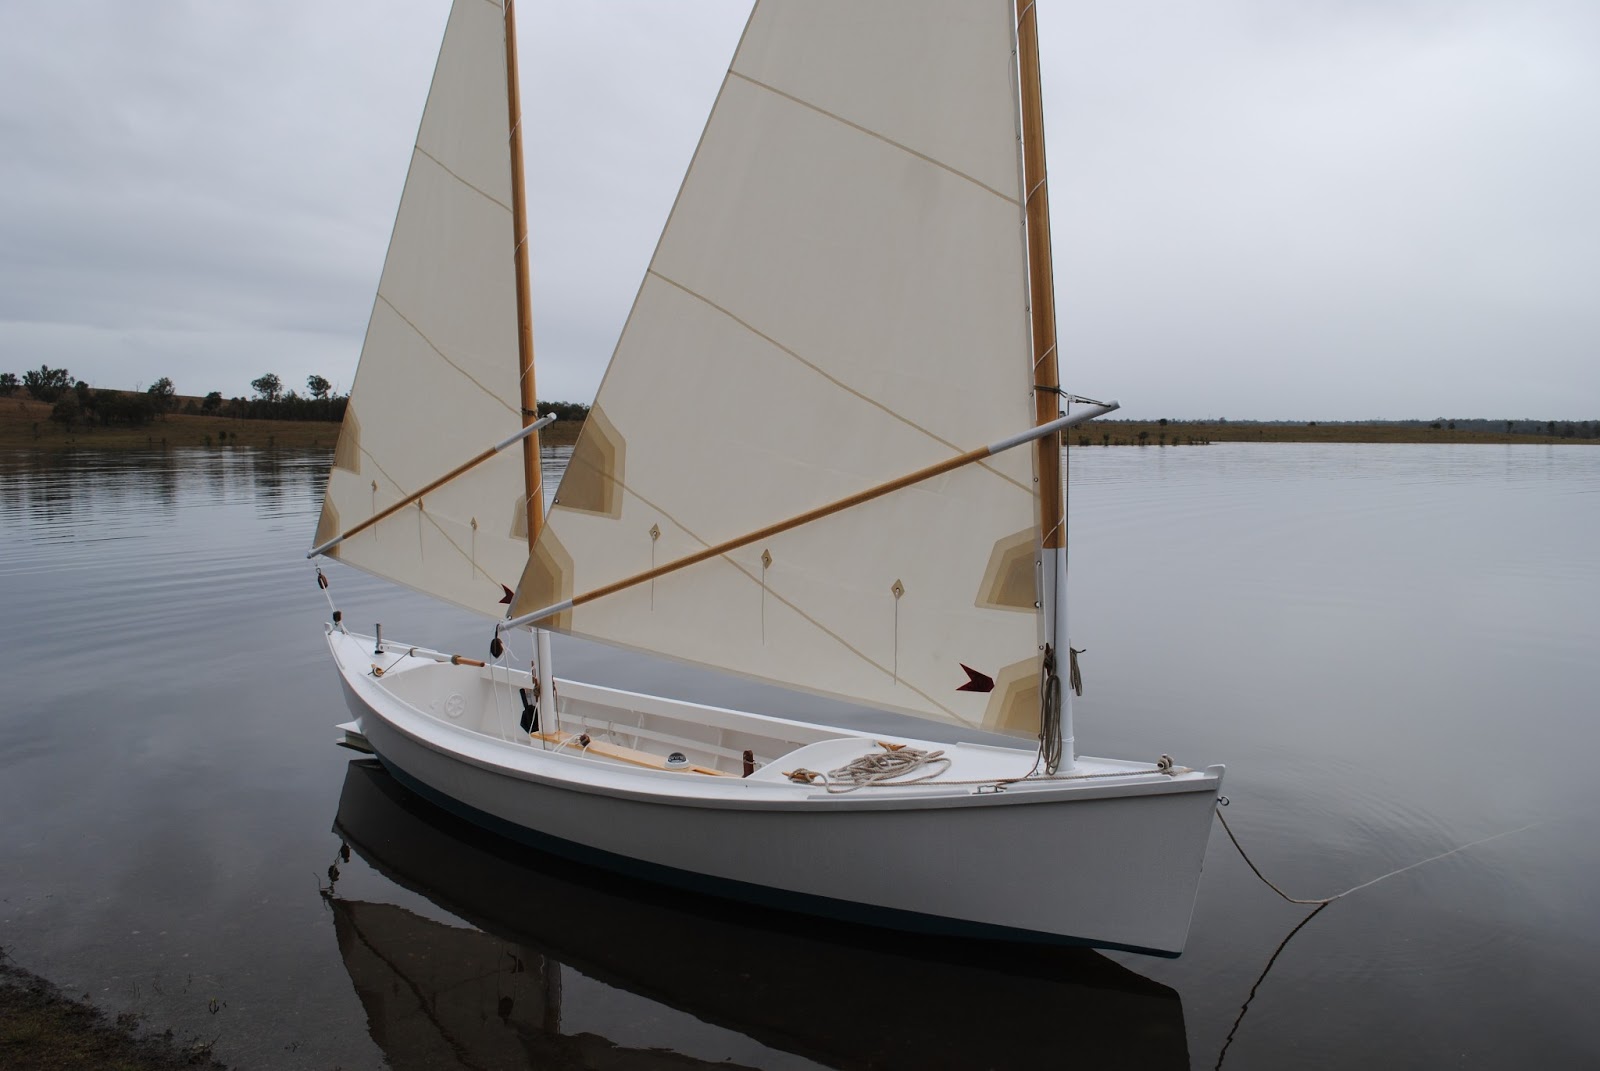 ross lillistone wooden boats: following the canoe yawl track